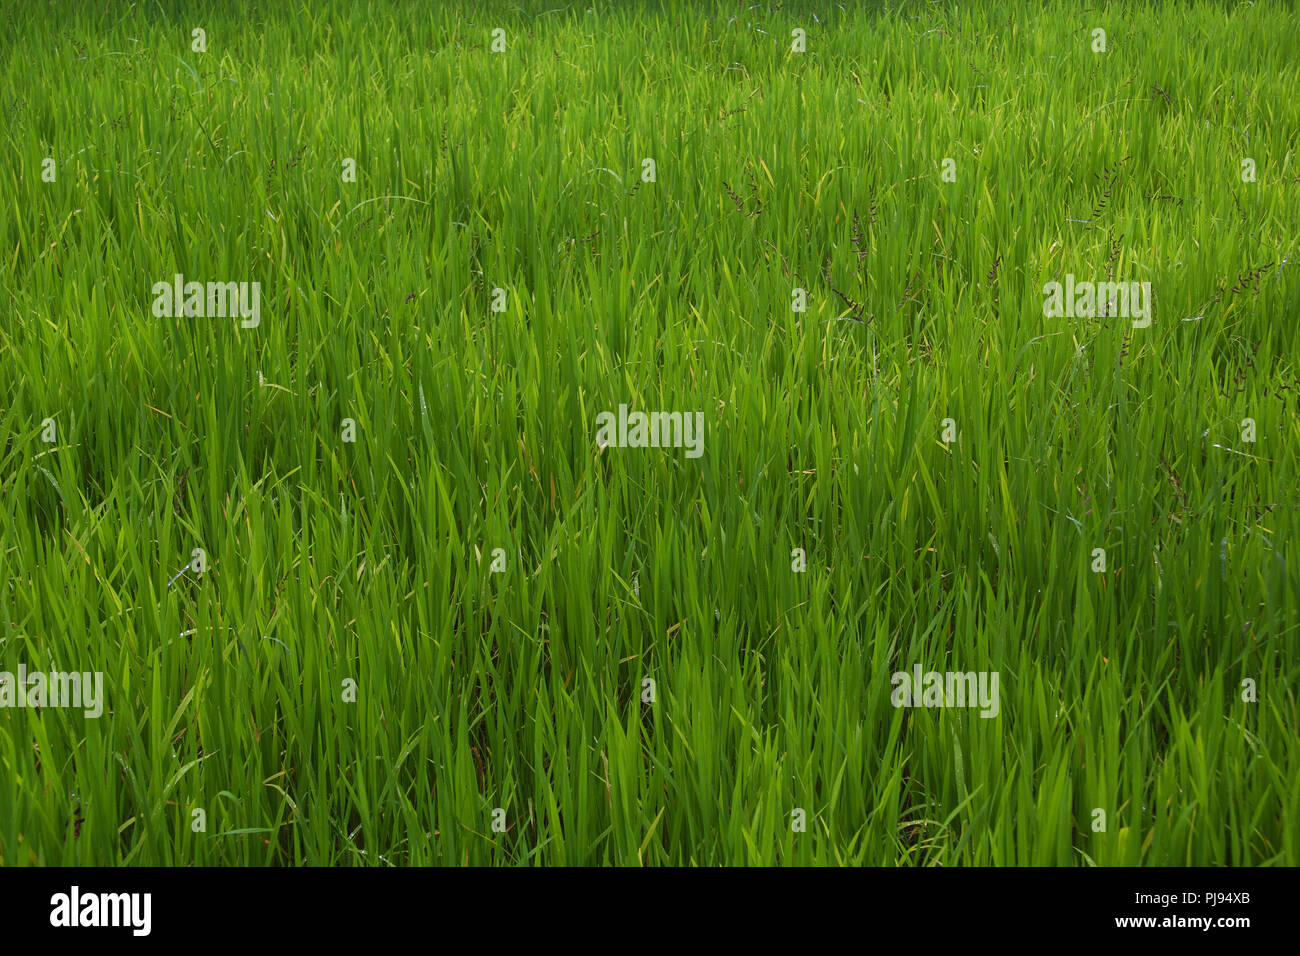 Grüner Hintergrund - Reis Feld in Sri Lanka Stockfoto